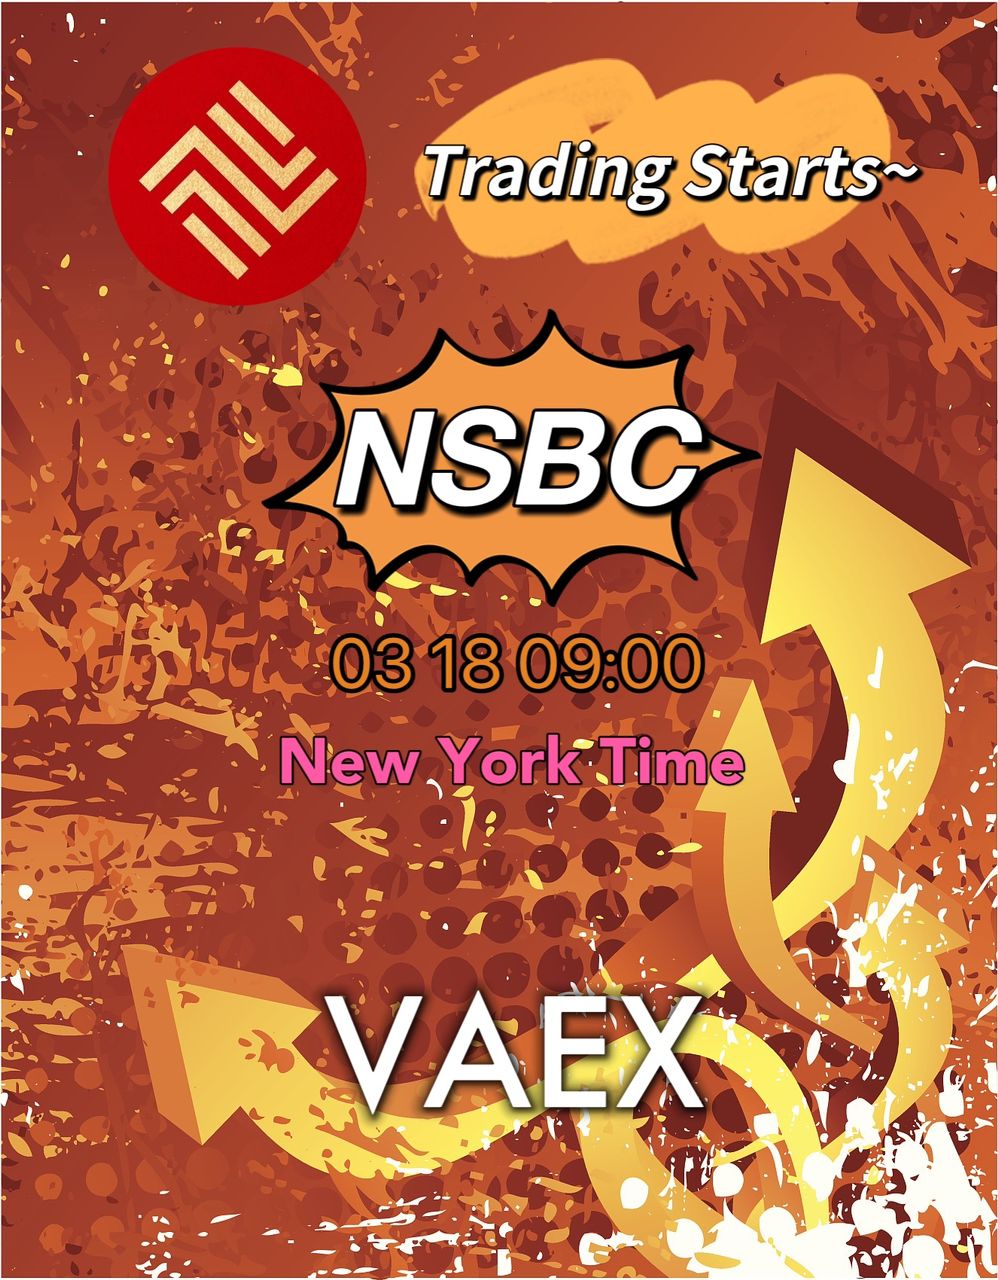 NSBC Token trading starts 